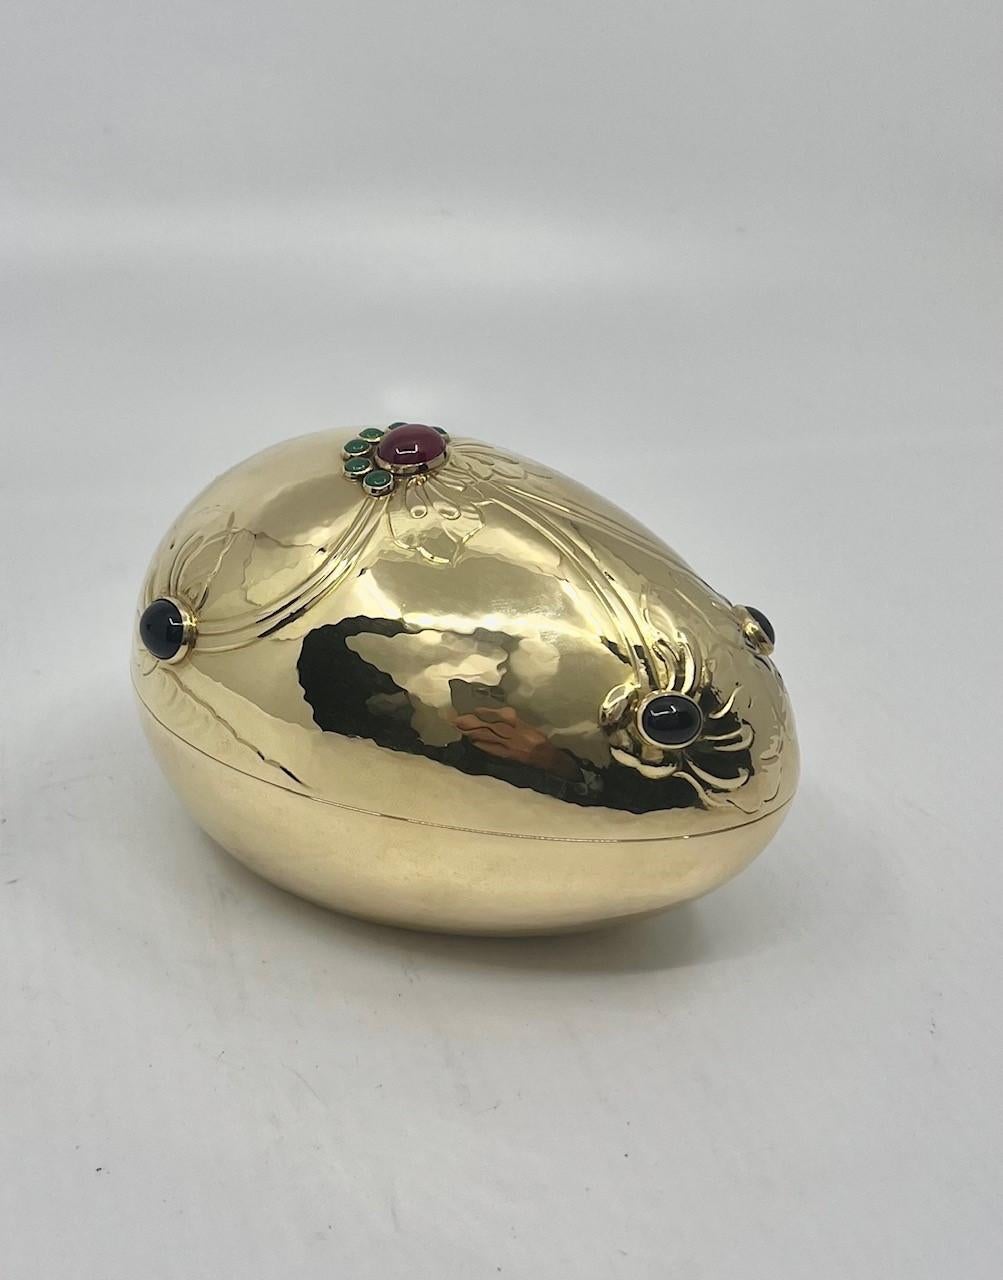 Rare Georg Jensen 18kt Gold Egg Bonbonnière In Excellent Condition For Sale In Hellerup, DK